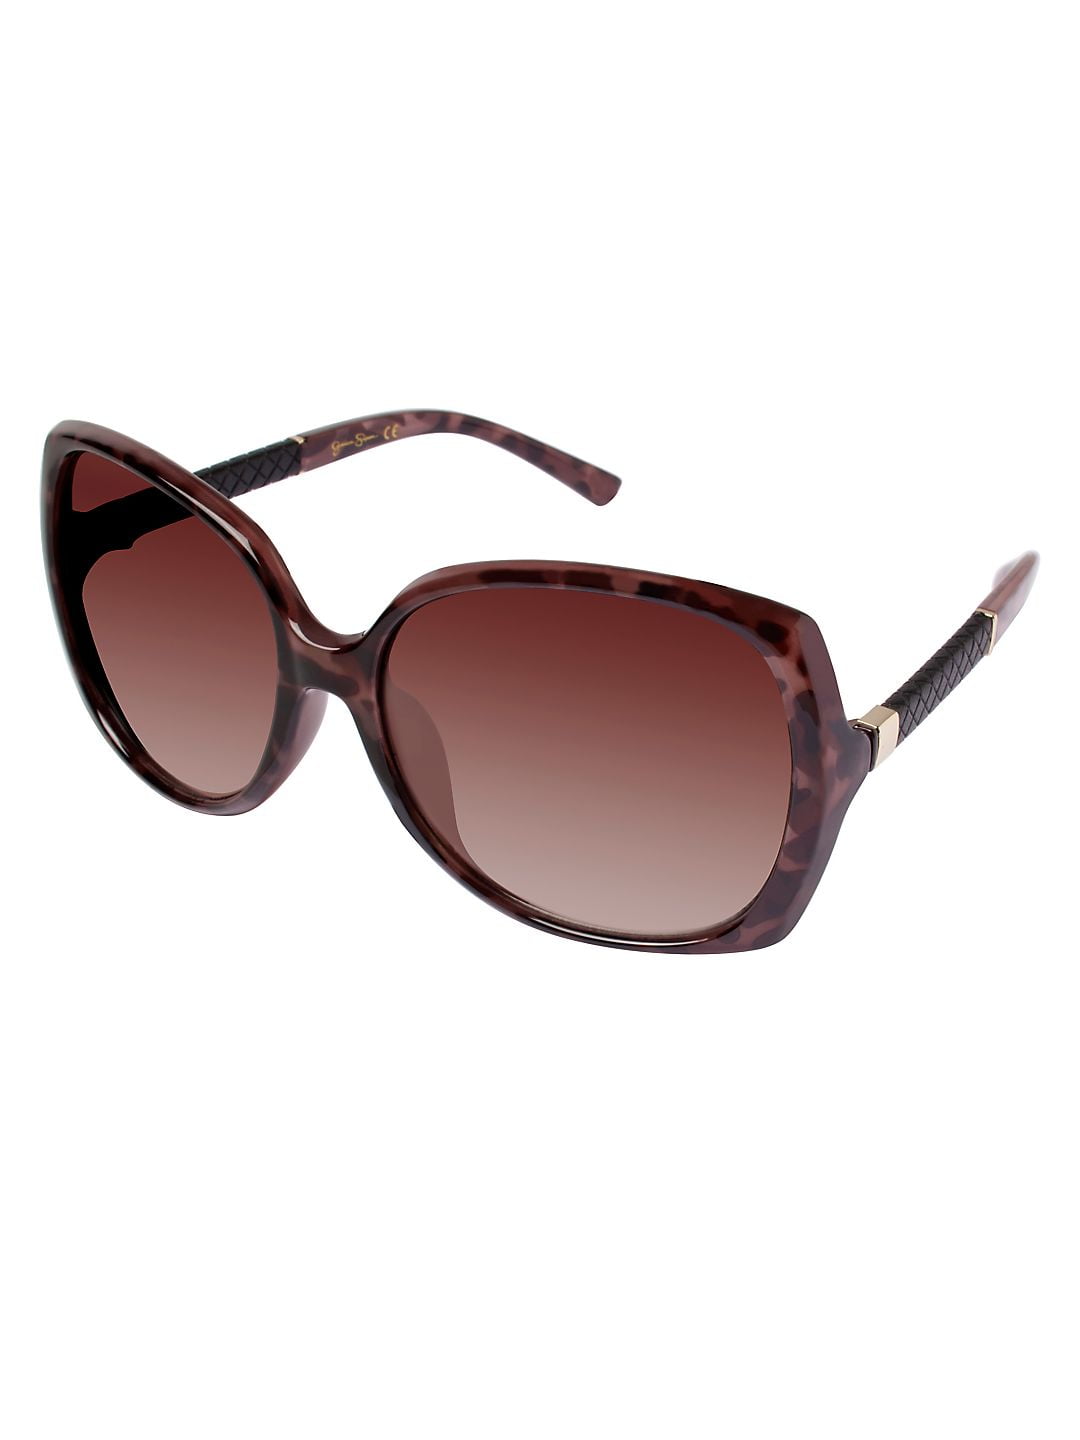 Super Oversized Square Sunglasses Womens Glamour Fashion Shades UV 400 